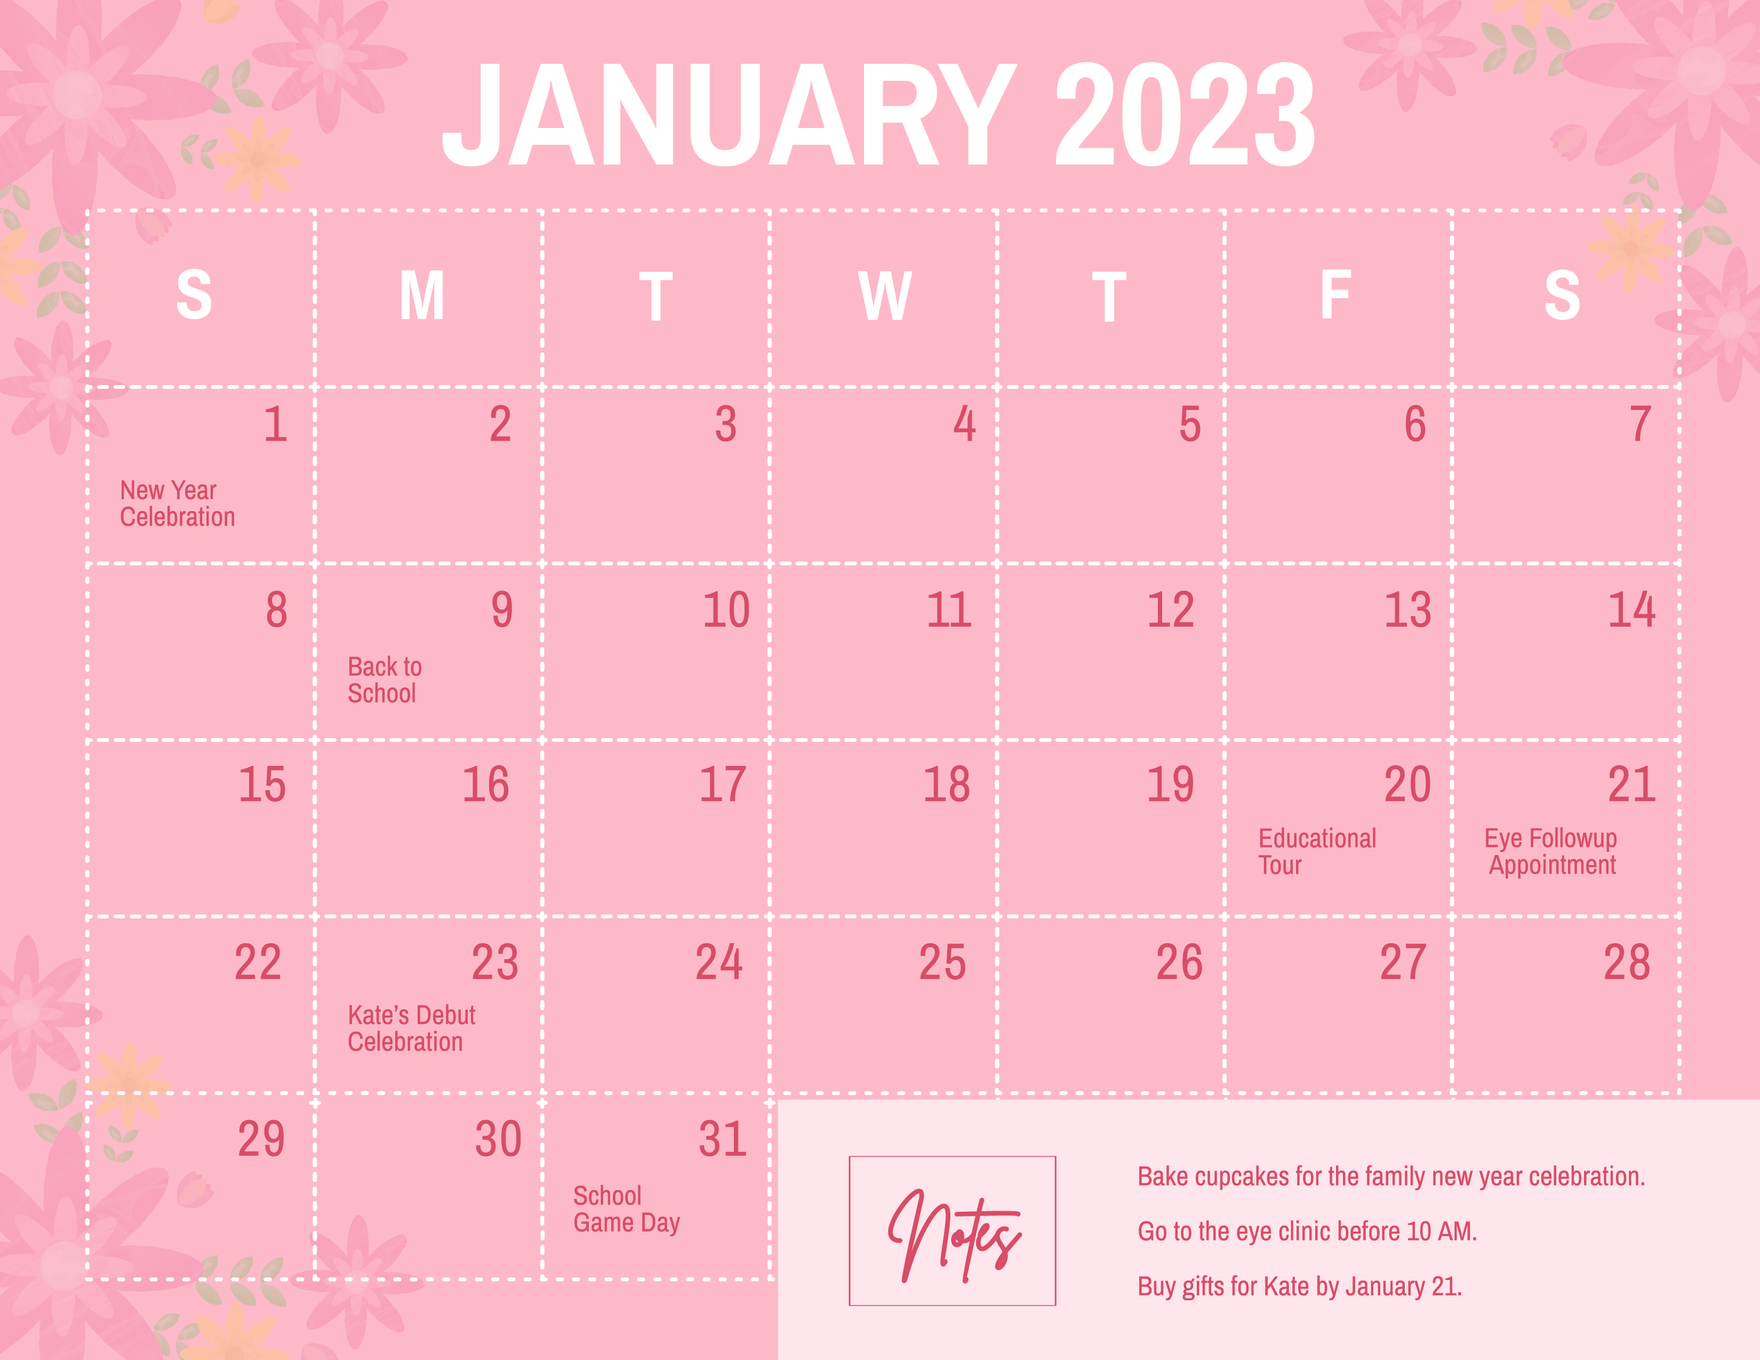 Lunar Calendar January 2023 - Illustrator, Word, PSD | Template.net